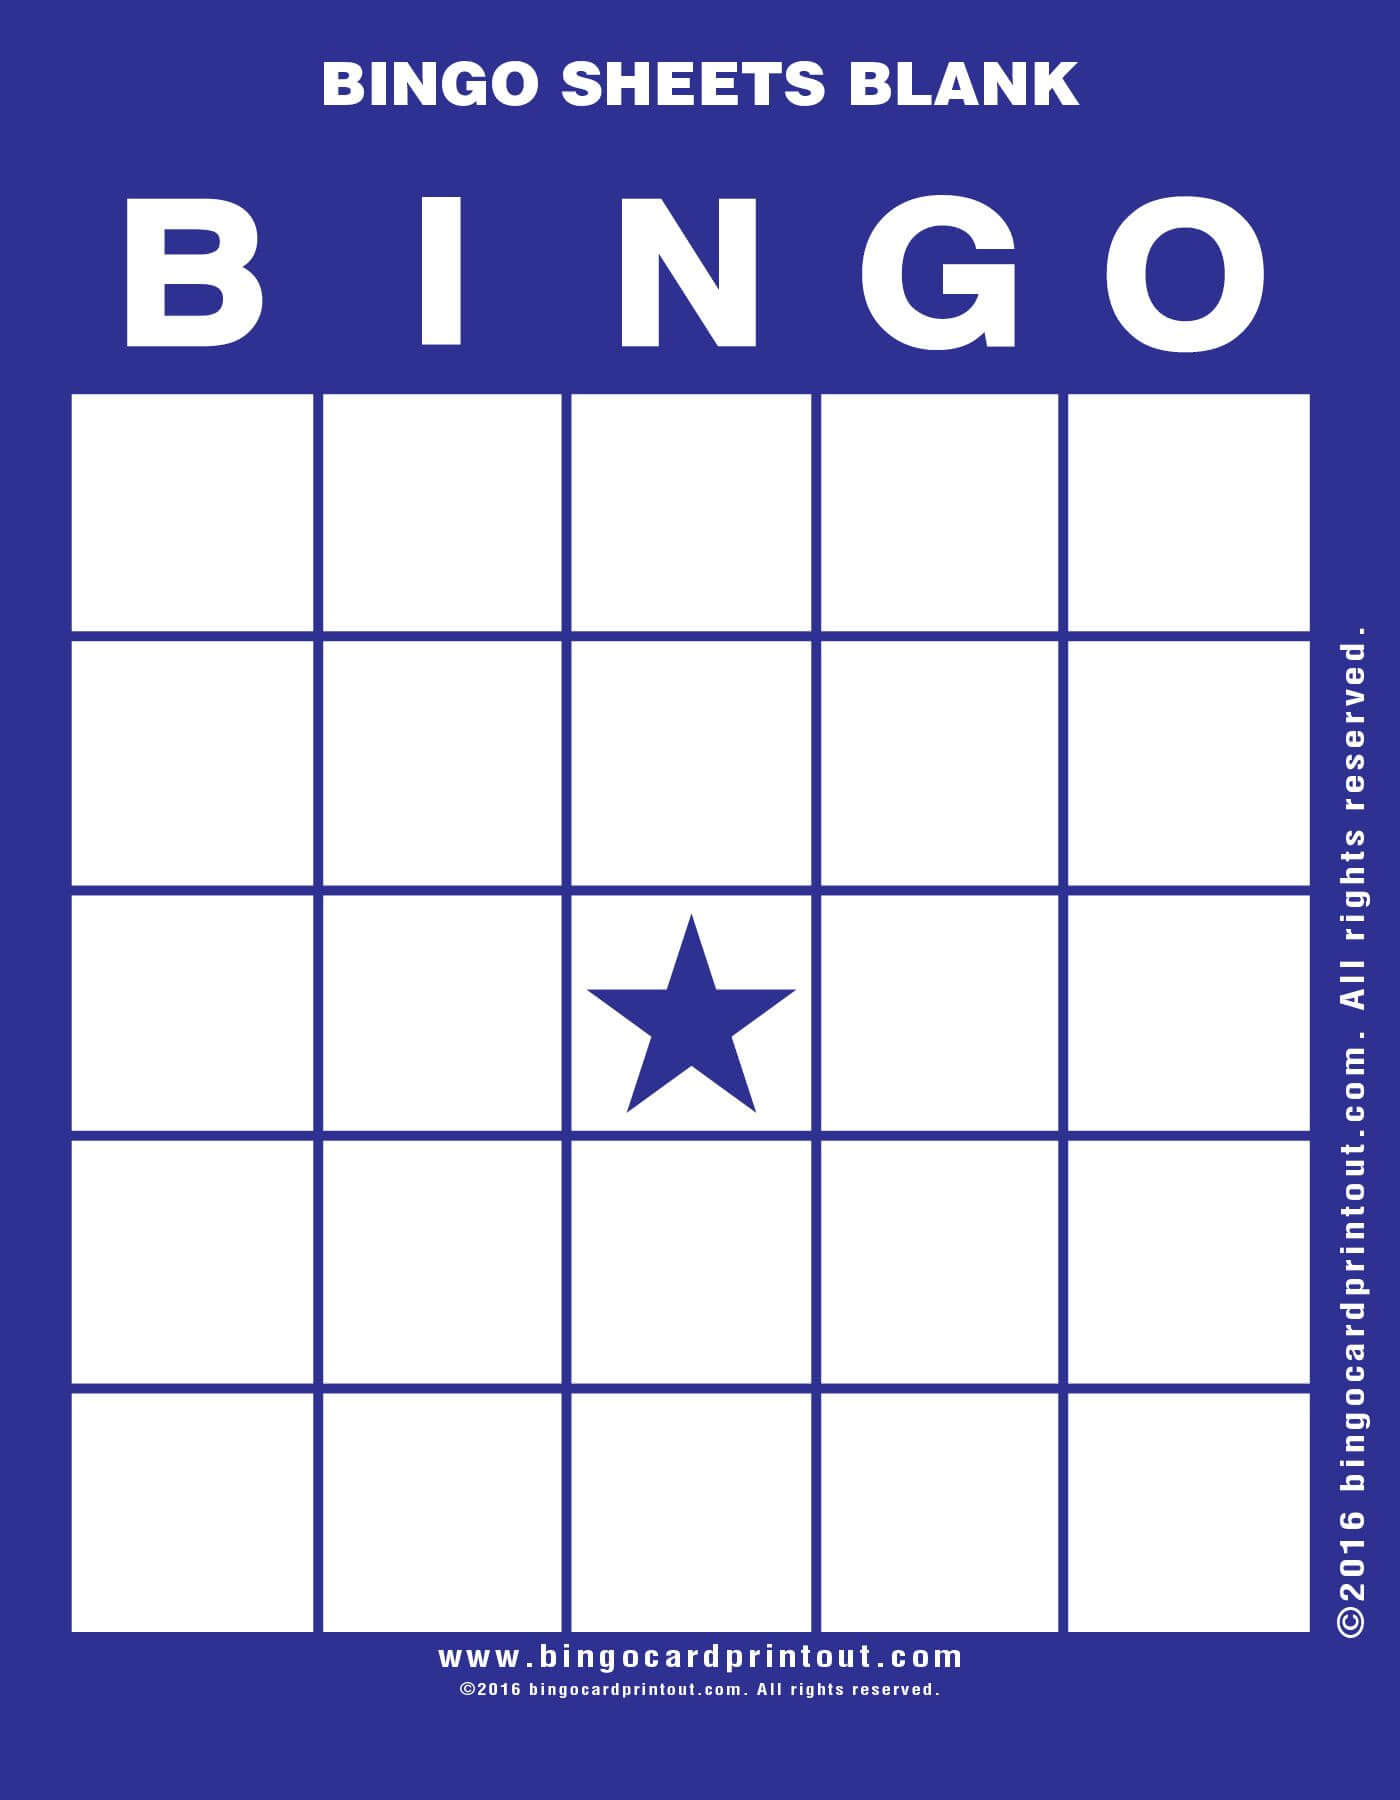 Bingo Sheets Blank 6 | Bingo Sheets Blank | Bingo Card Within Blank Bingo Card Template Microsoft Word